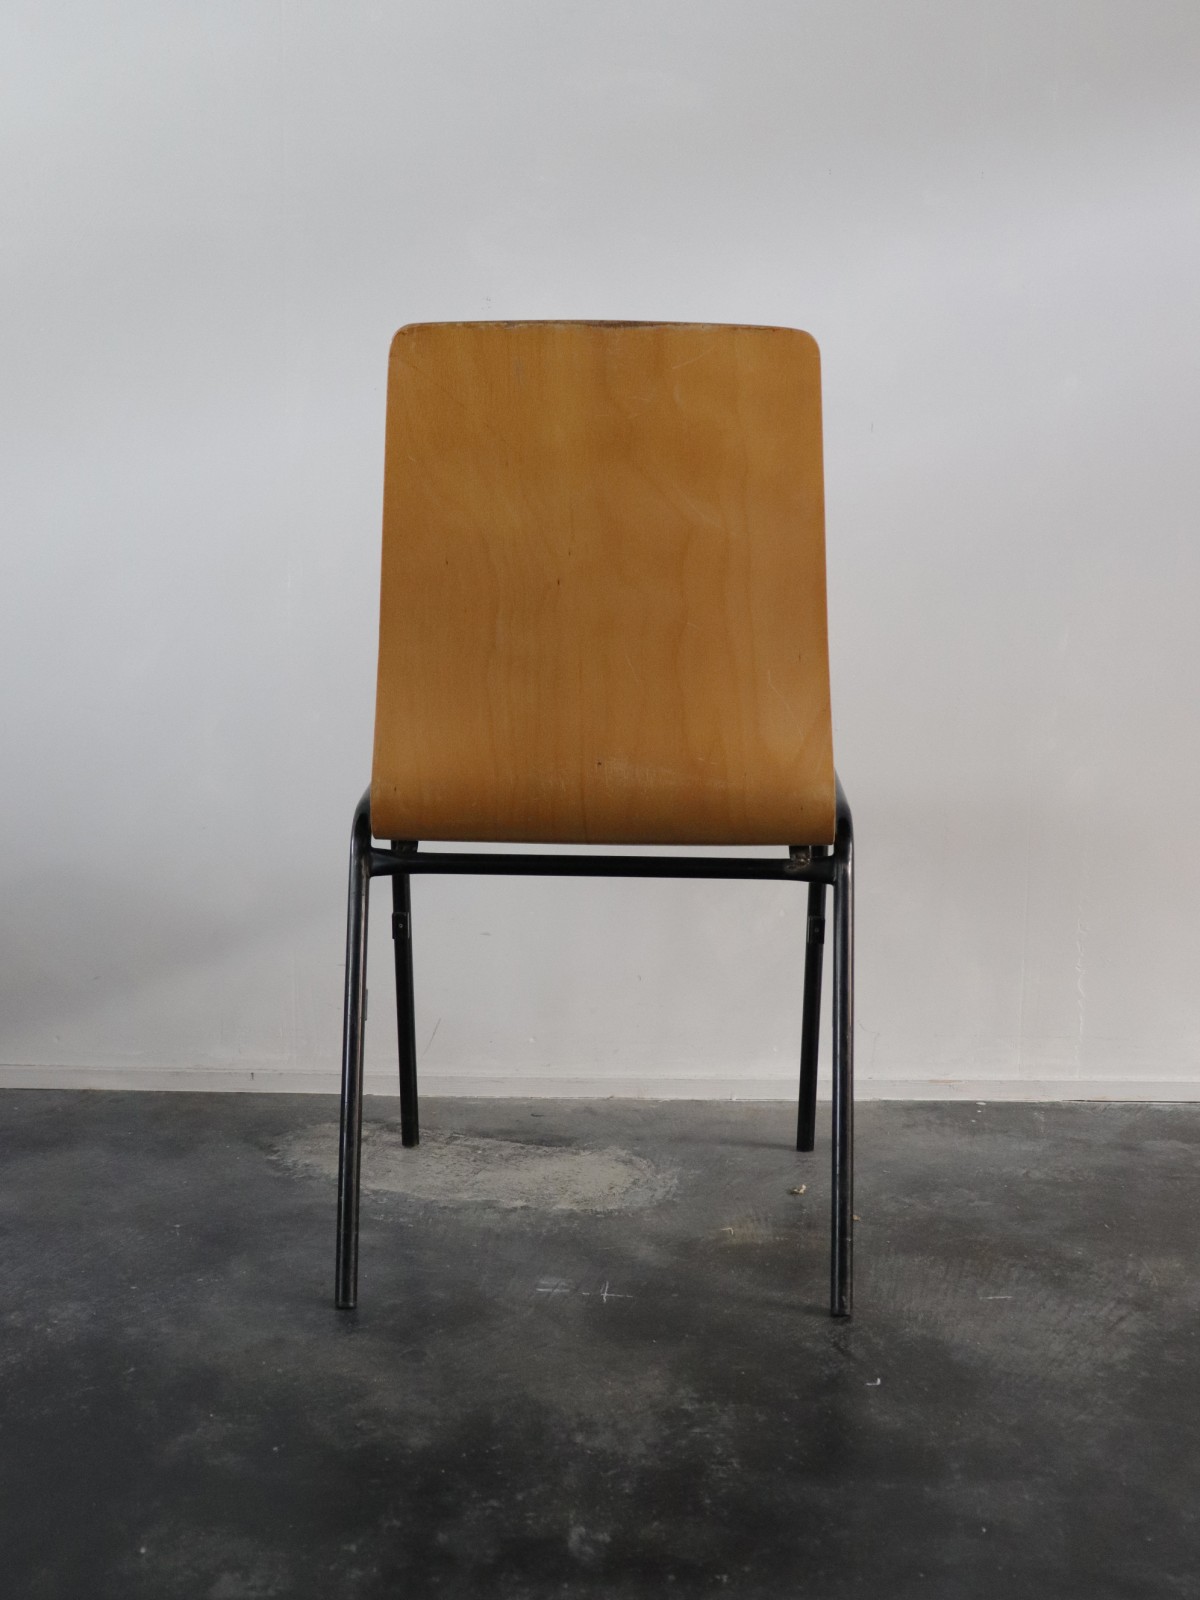 1970's, germany, school chair